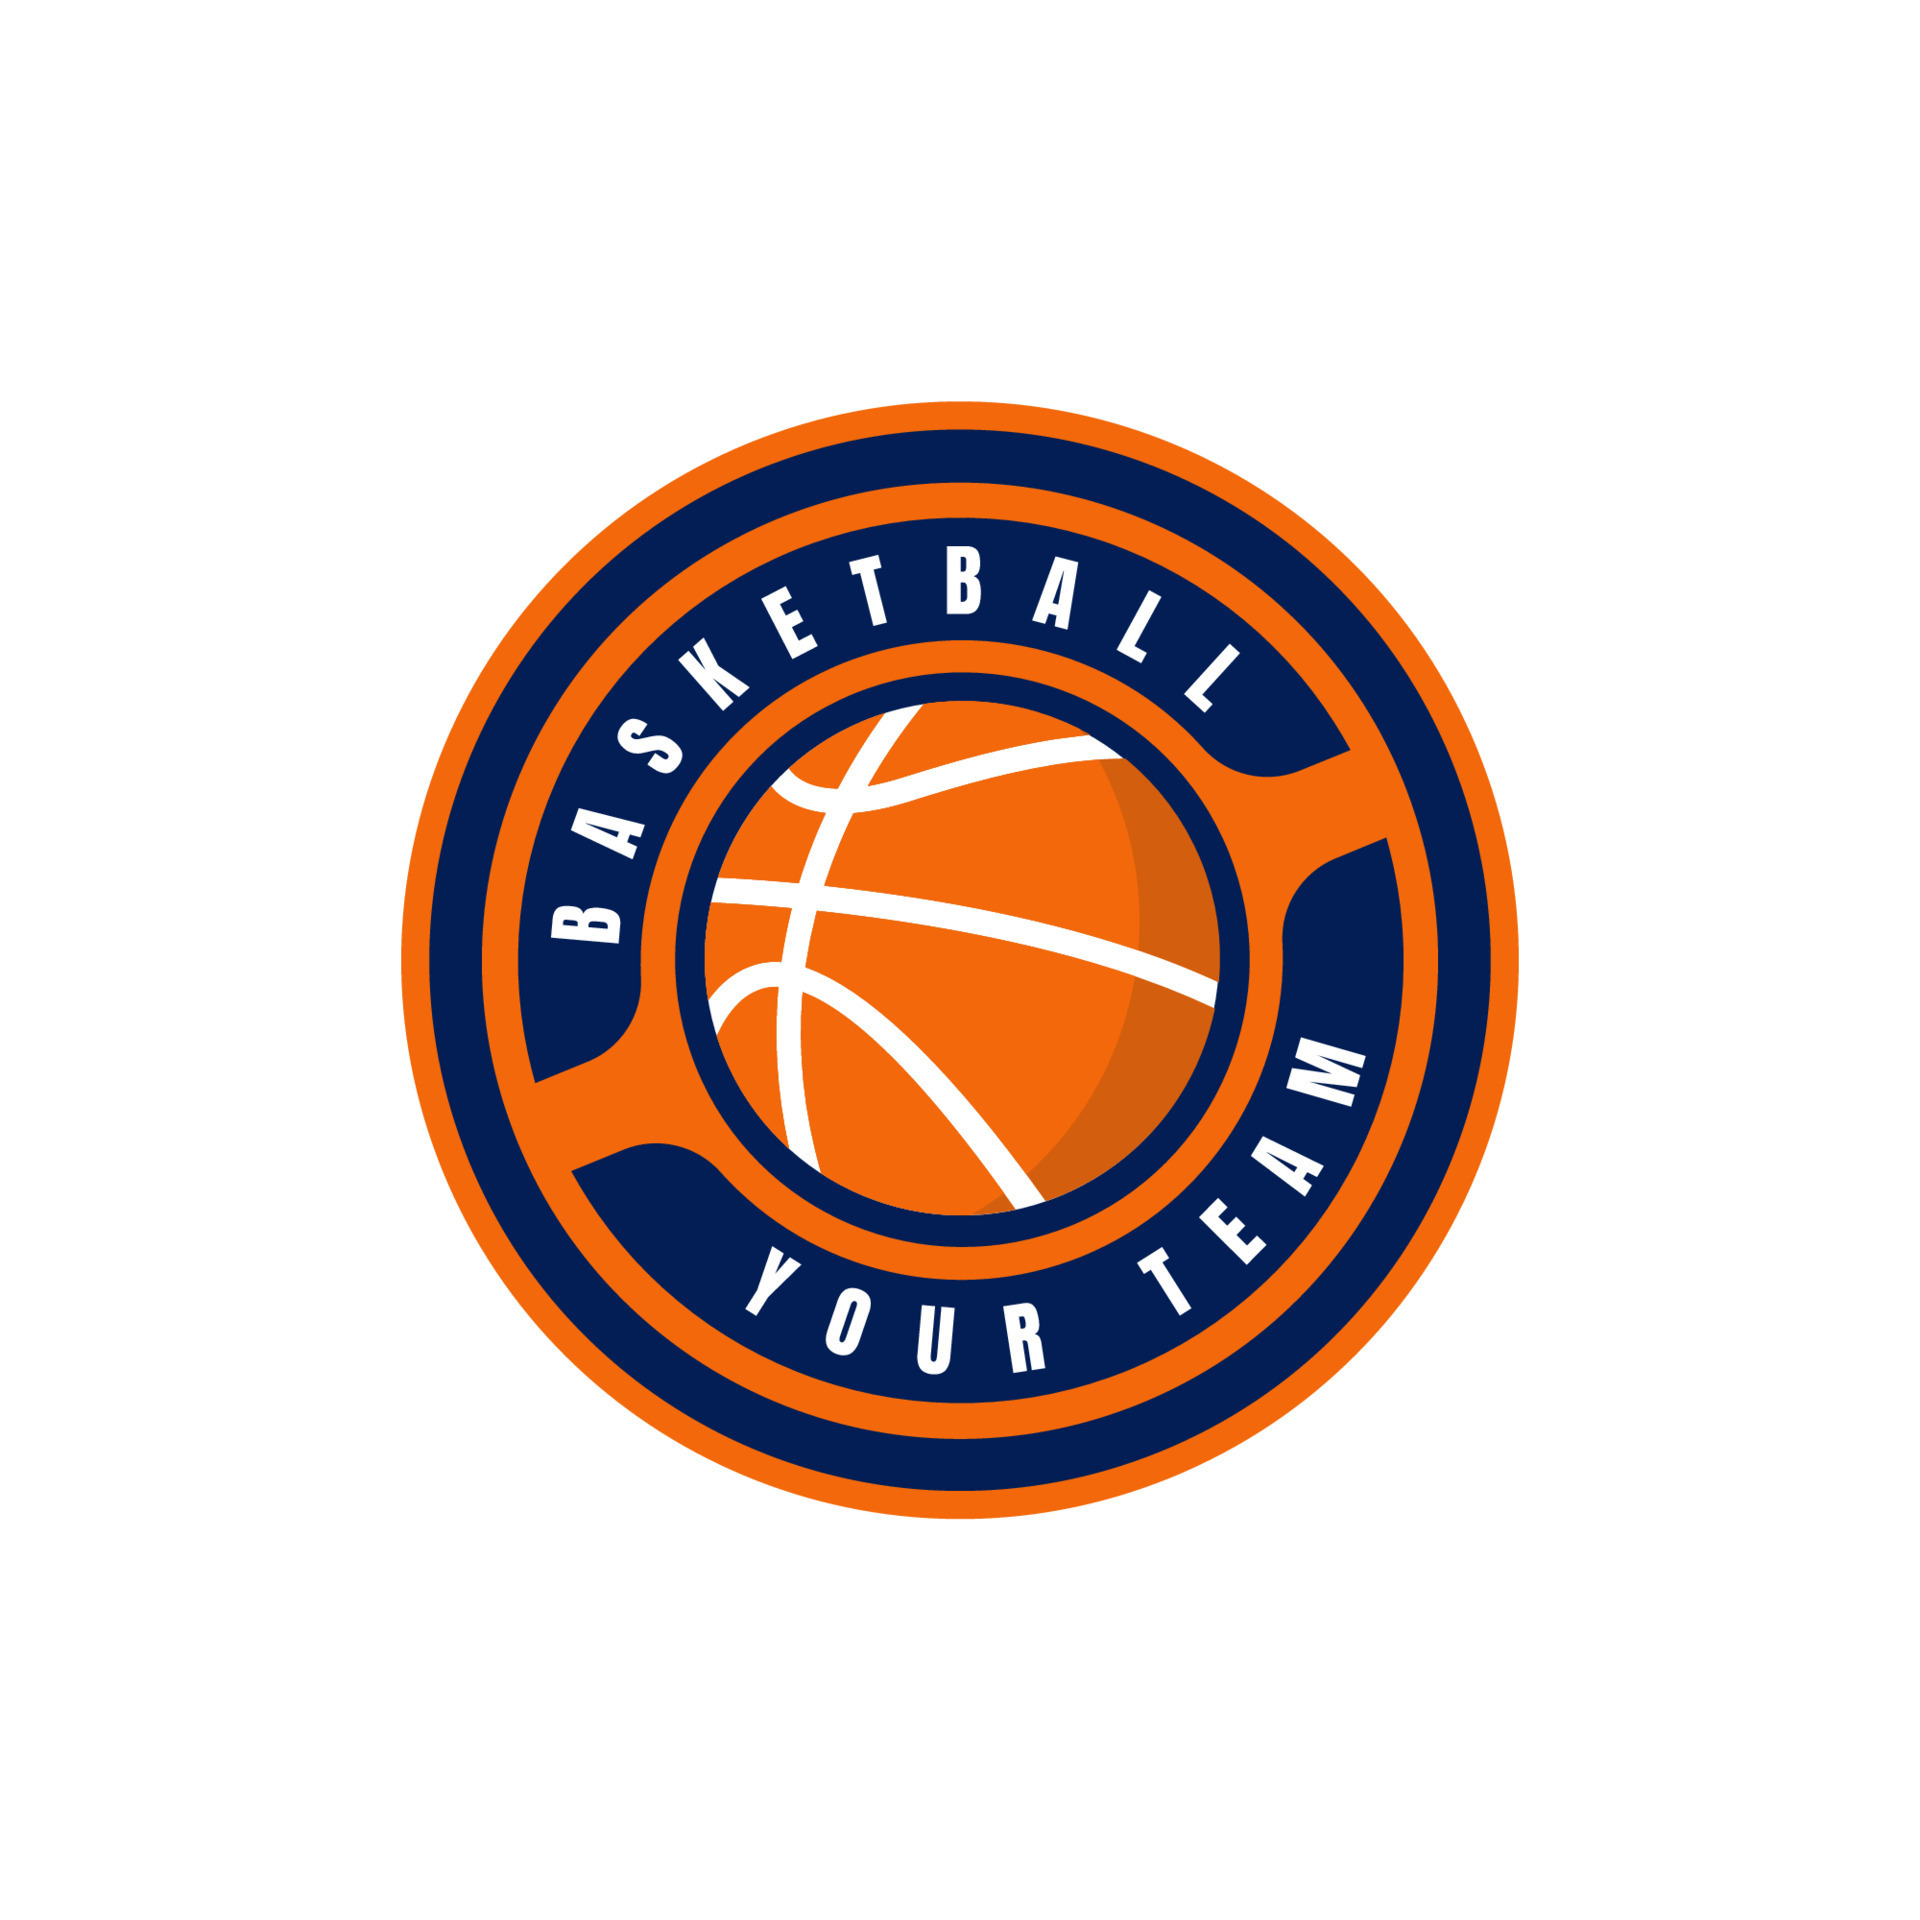 Premium Vector  Basketball championship logo design shield badge sports  team club game style template design